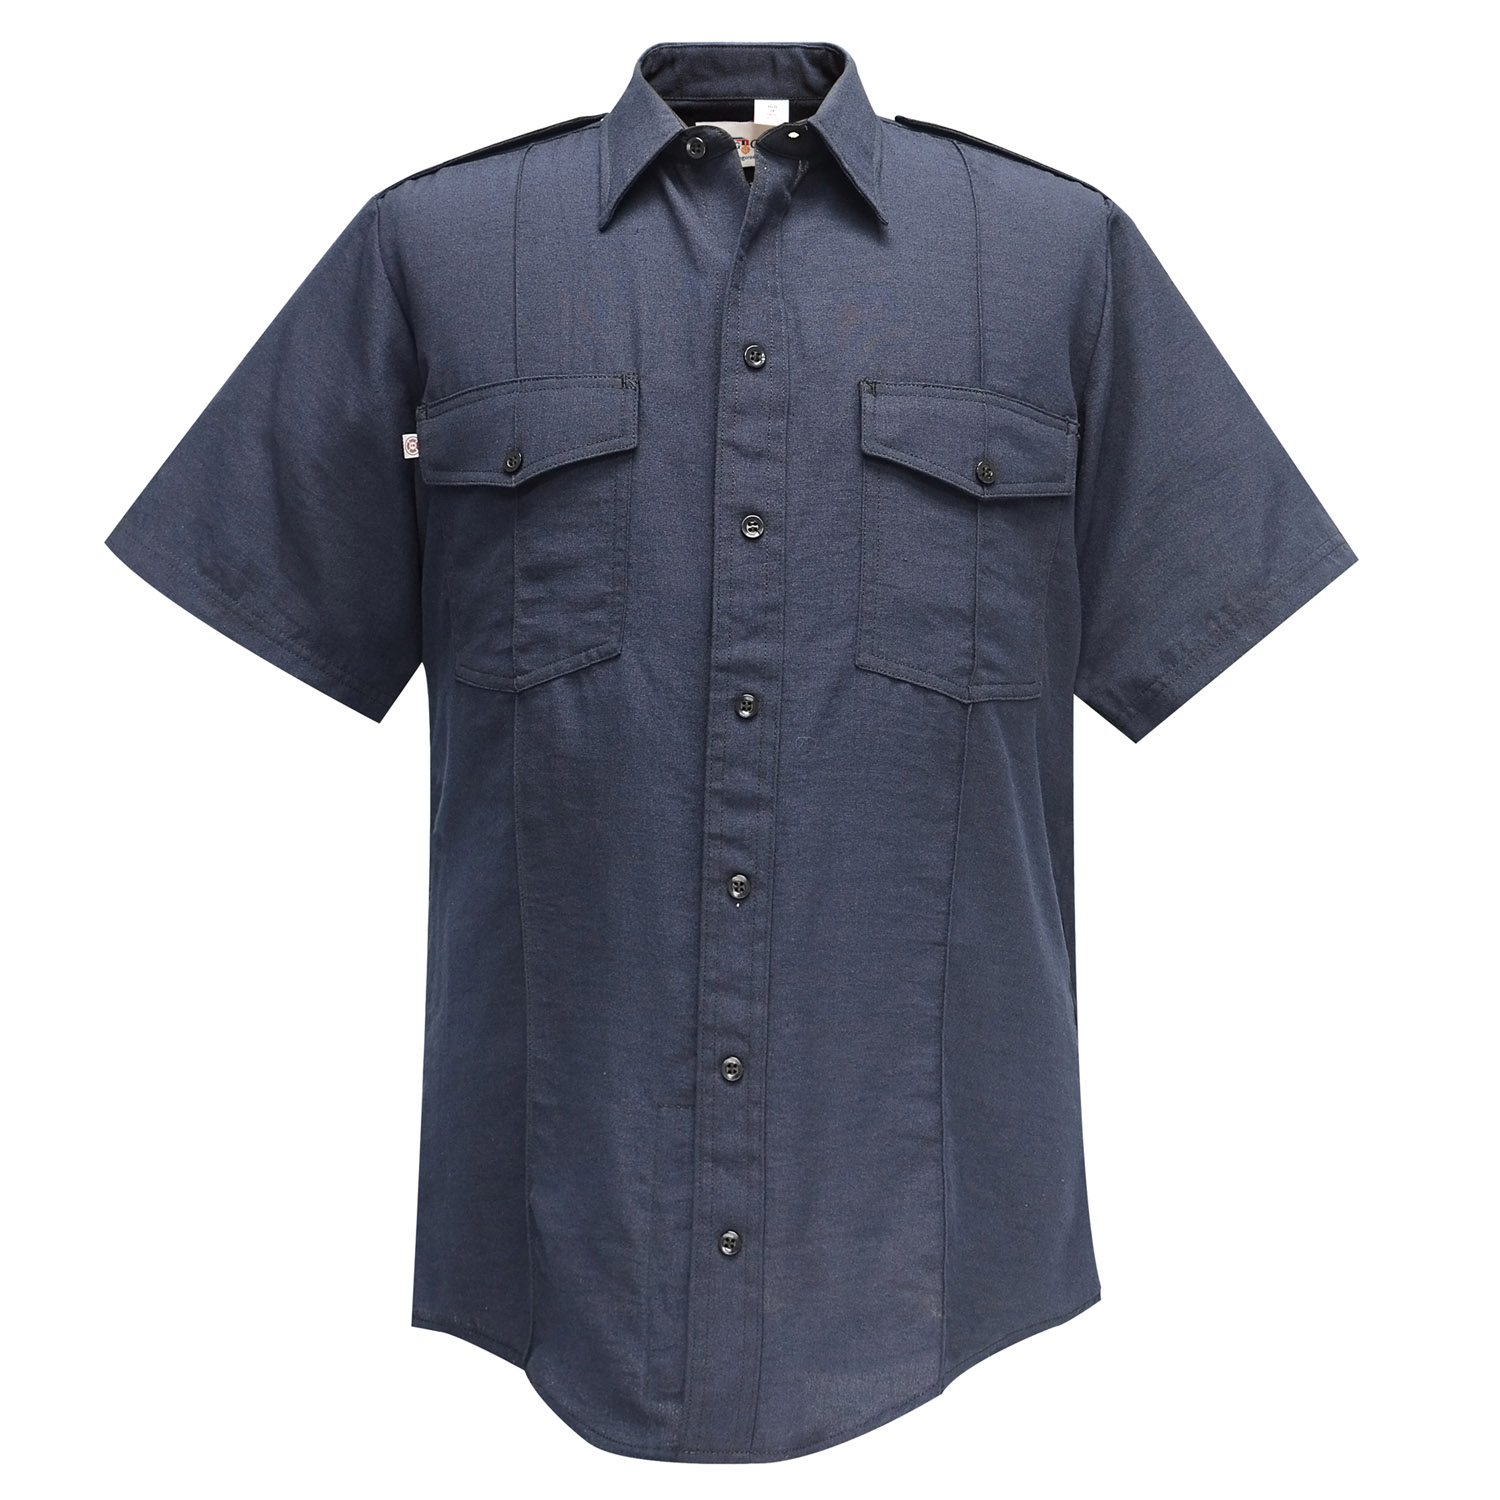 Flying Cross Men's Nomex IIIA Short-Sleeve Shirt